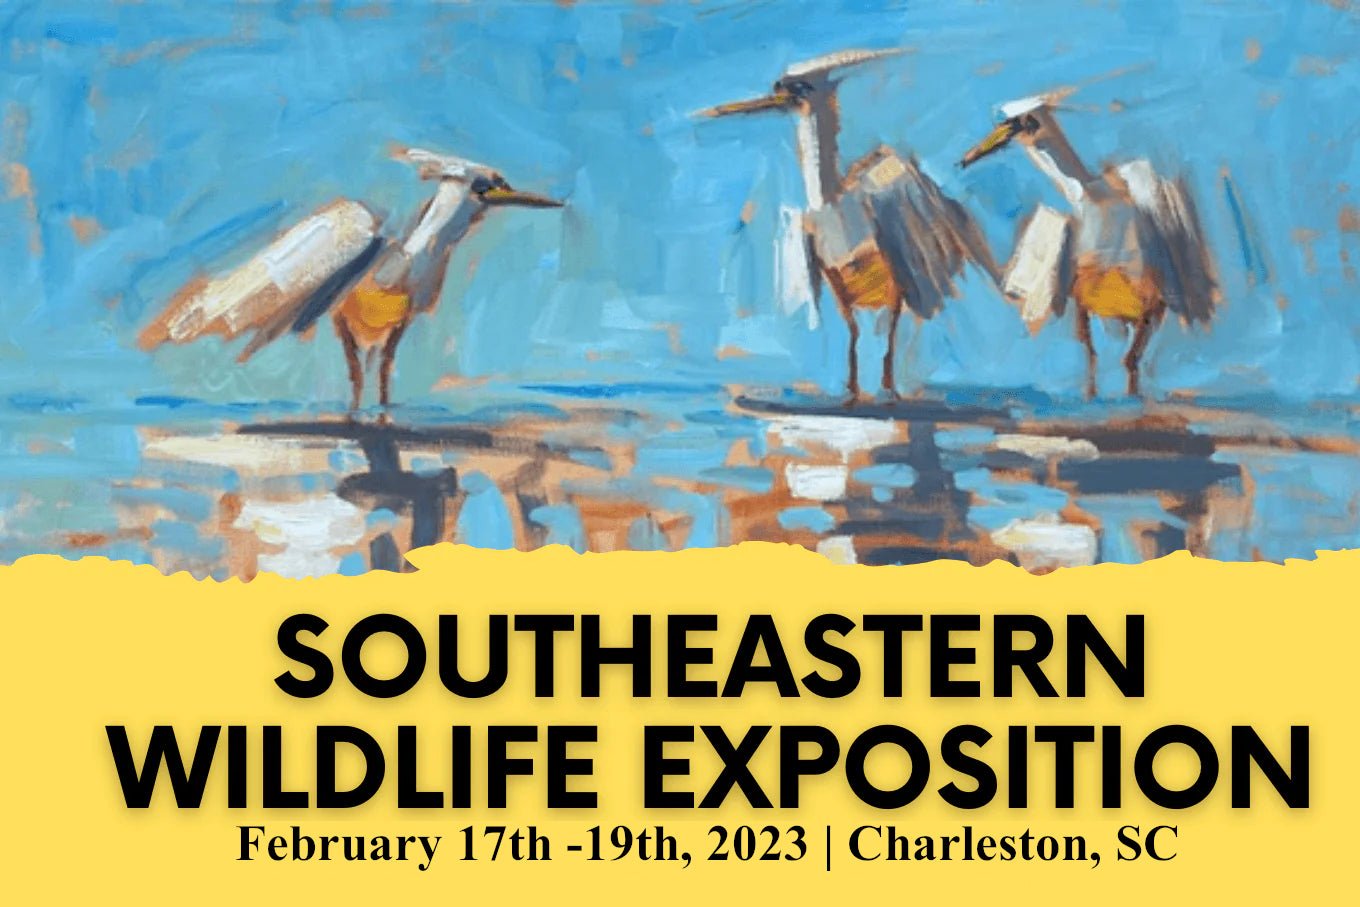 Southeastern Wildlife Exposition LePrince Charleston Art Galleries on